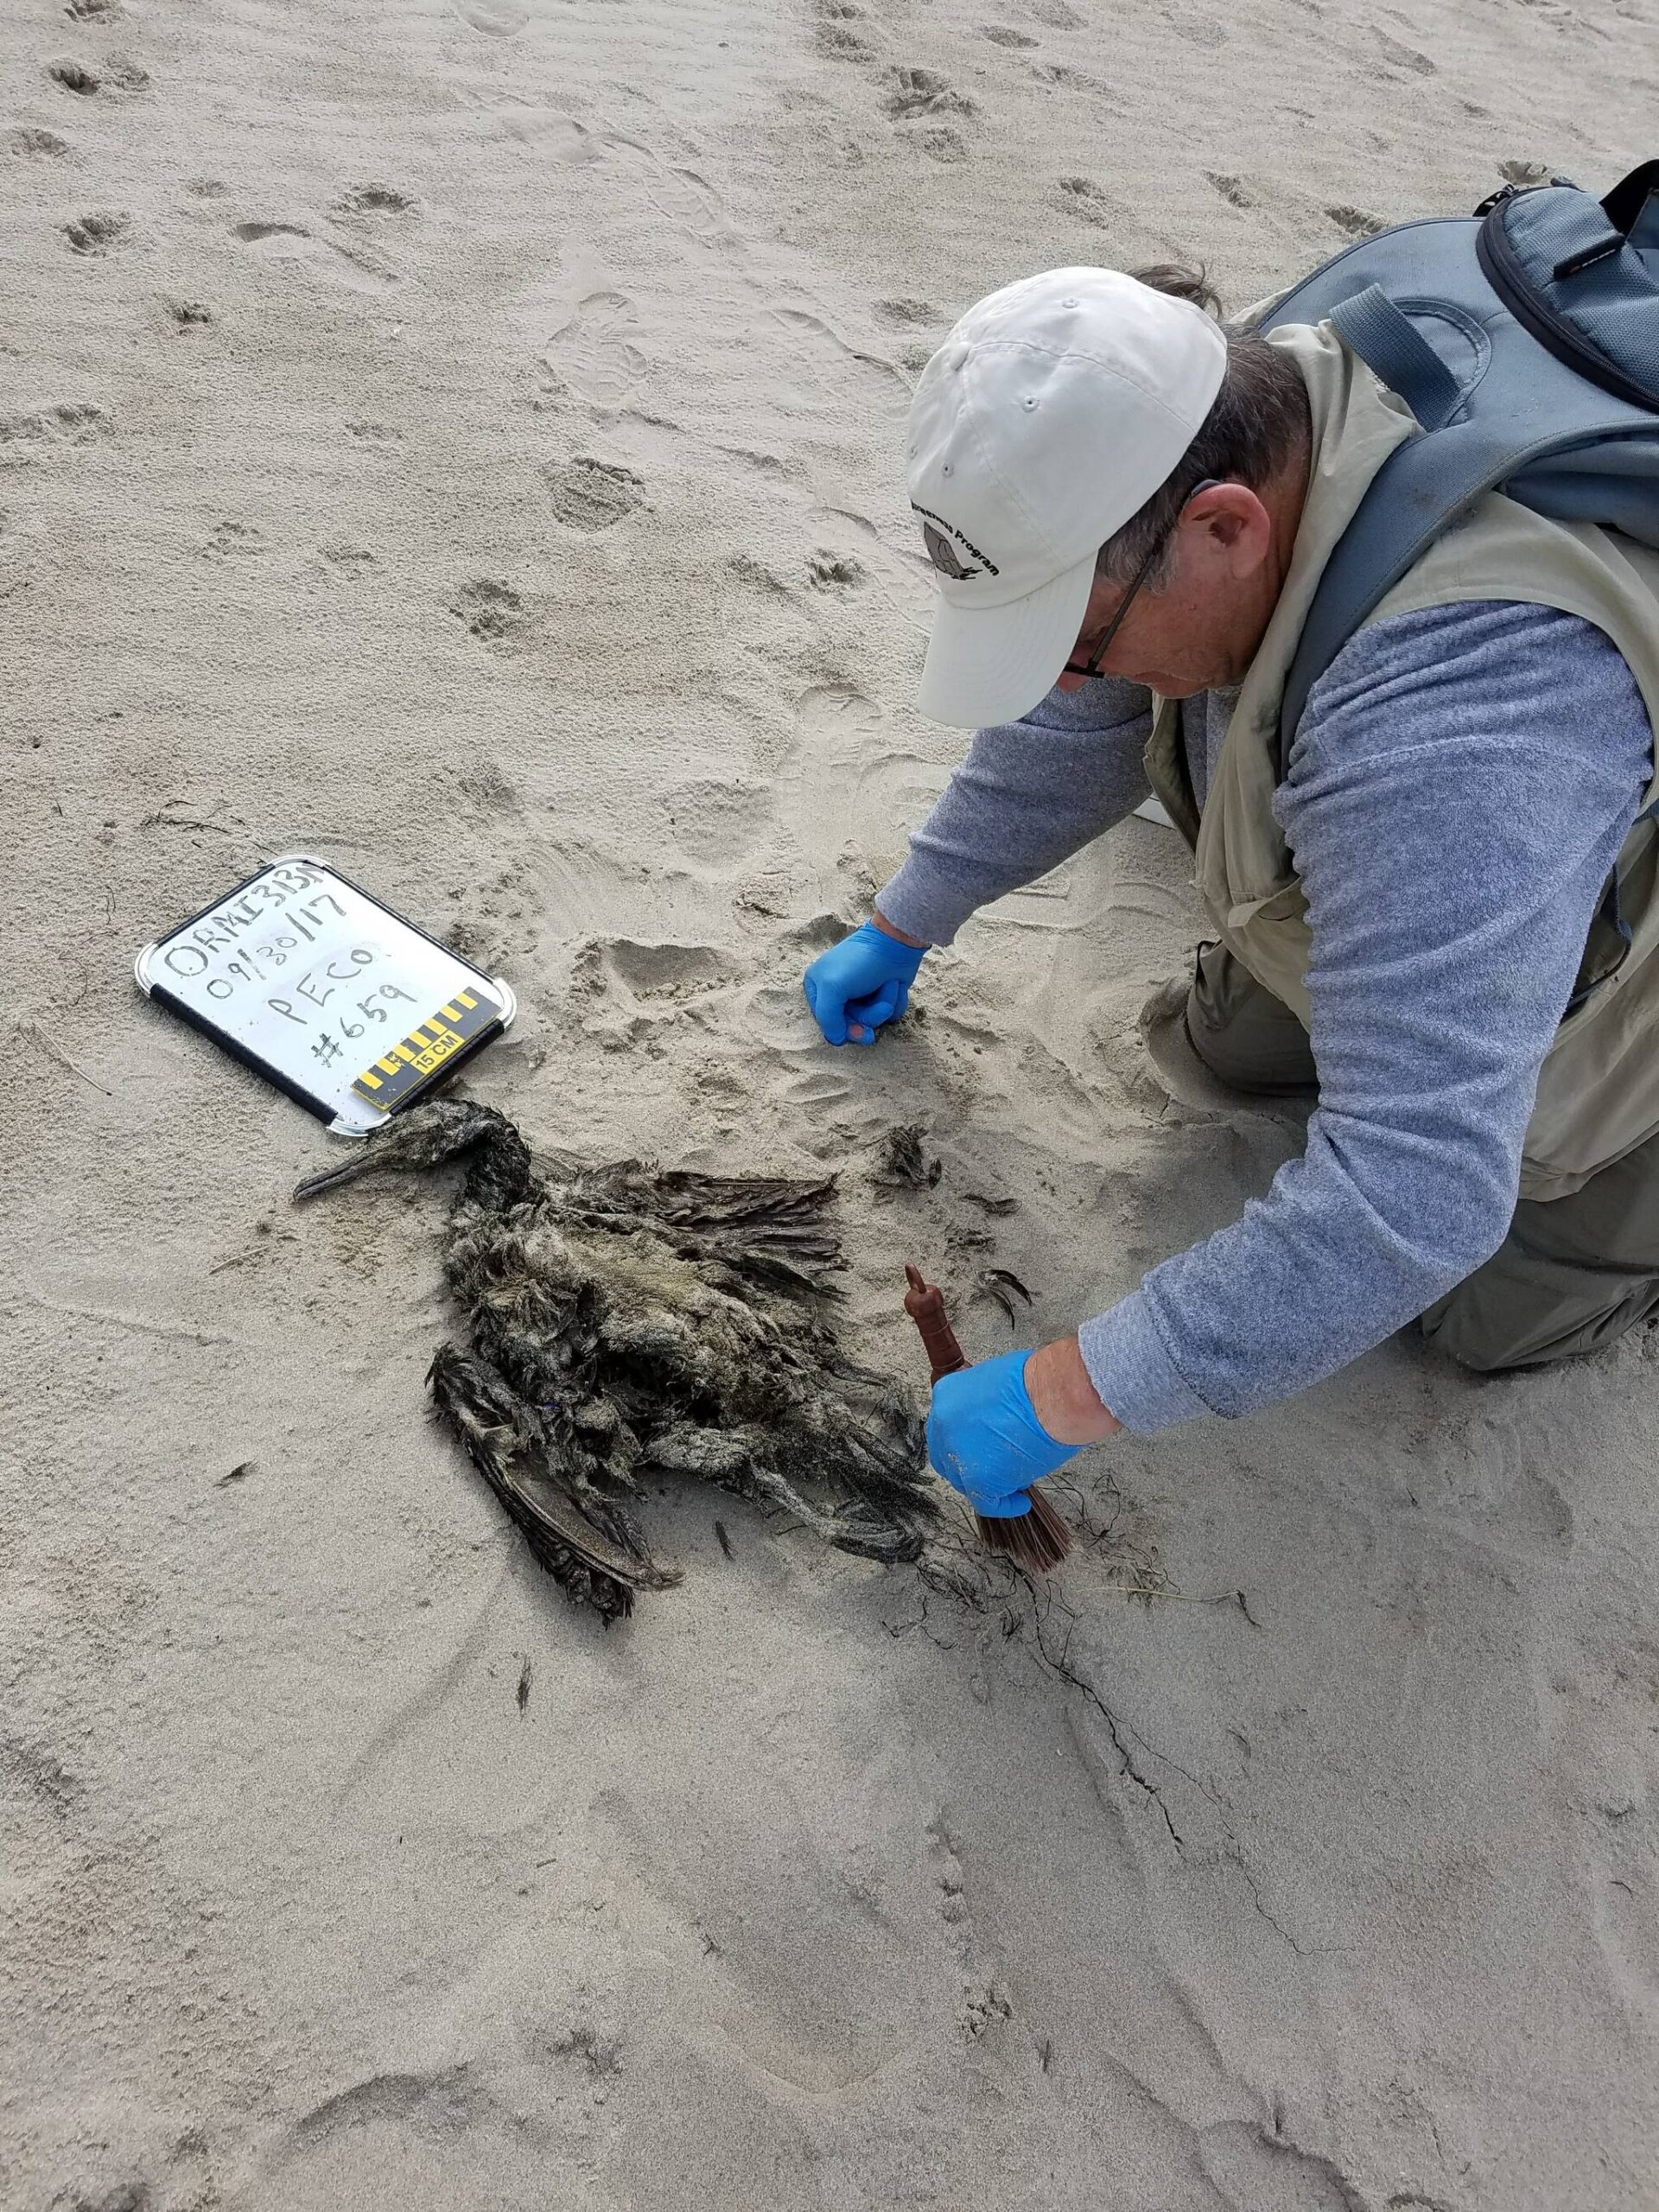 Photo by COASST
A volunteer surveyor examining deceased pelagic cormorant.